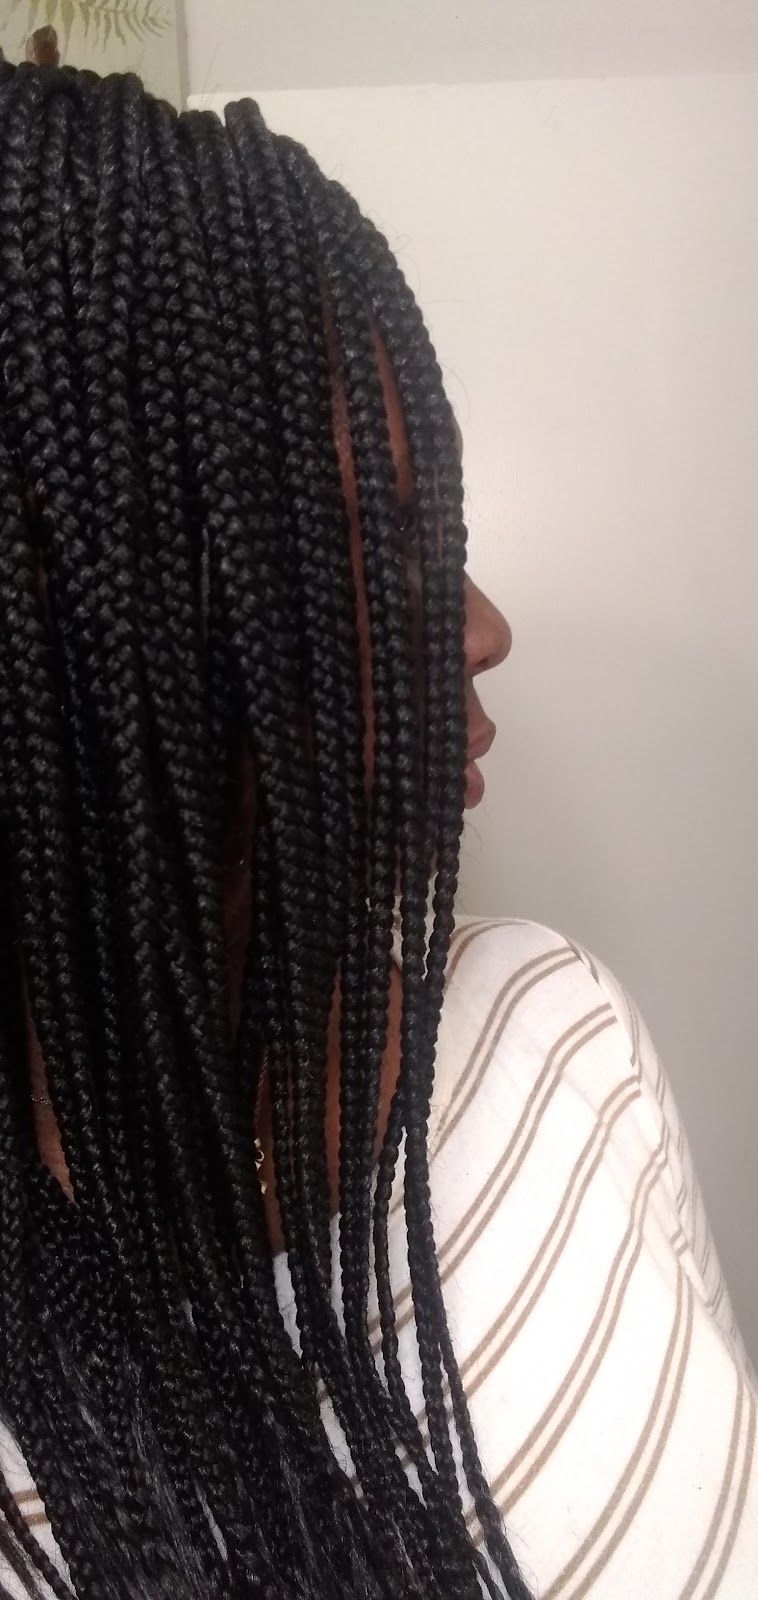 Awa’s African Hair Braiding | 3062 Meadowbridge Rd, Richmond, VA 23222, USA | Phone: (804) 643-8416